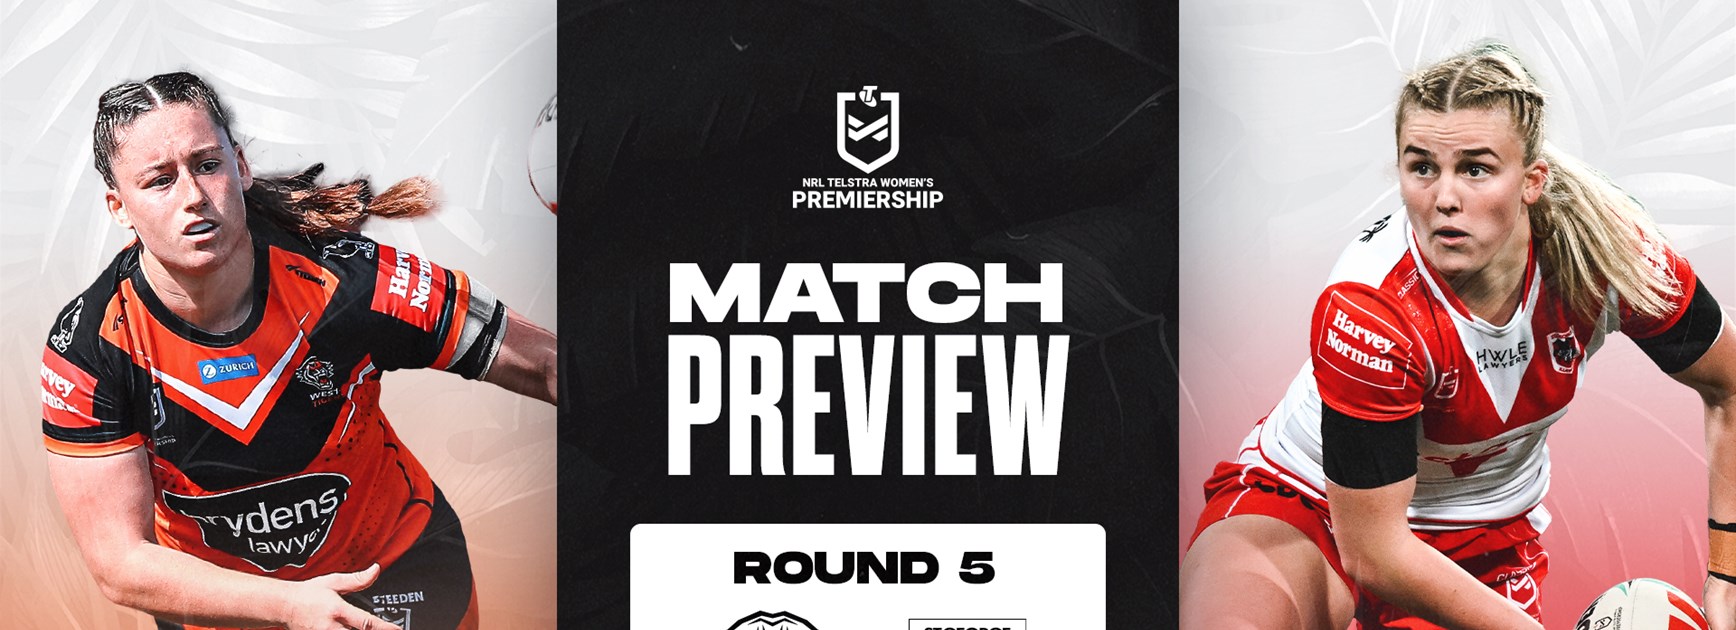 Match Preview: NRLW Round 5 vs Dragons